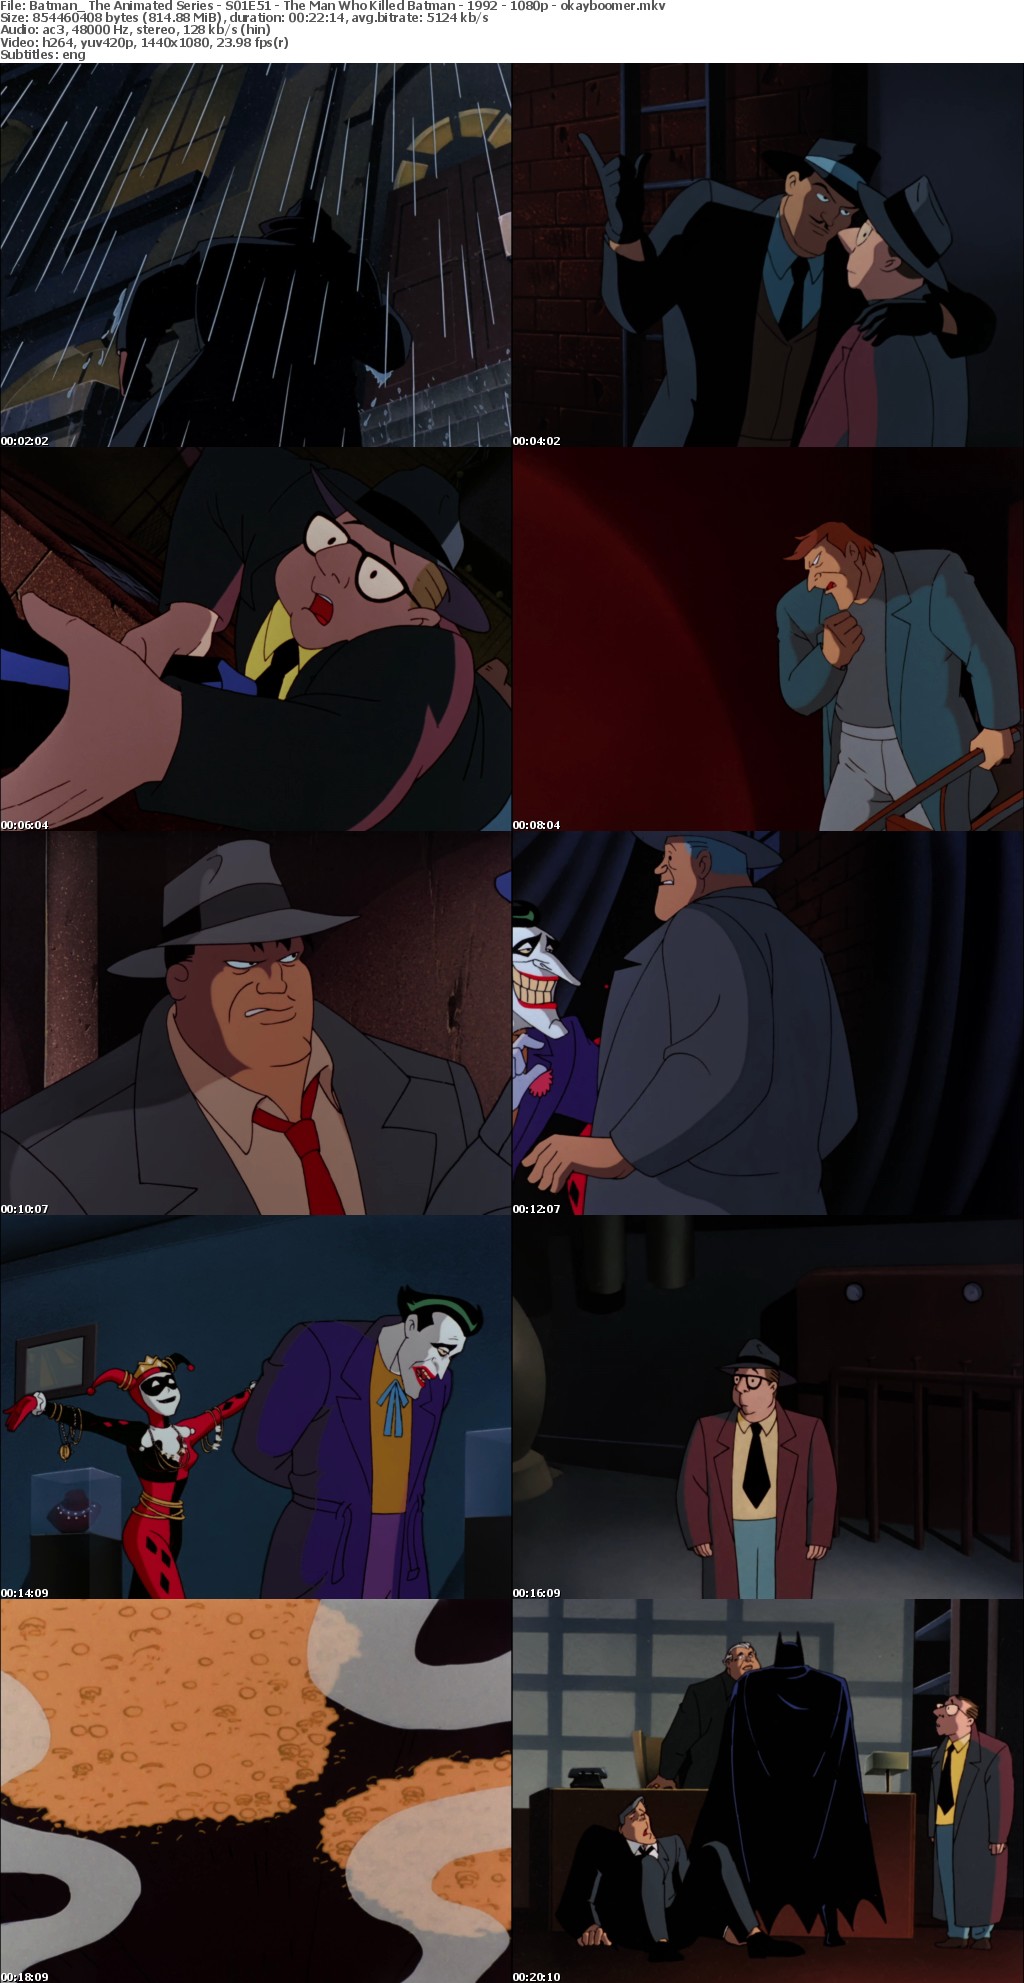 Batman The Animated Series - S01E51 - The Man Who Killed Batman - 1992 - 1080p - okayboomer mkv